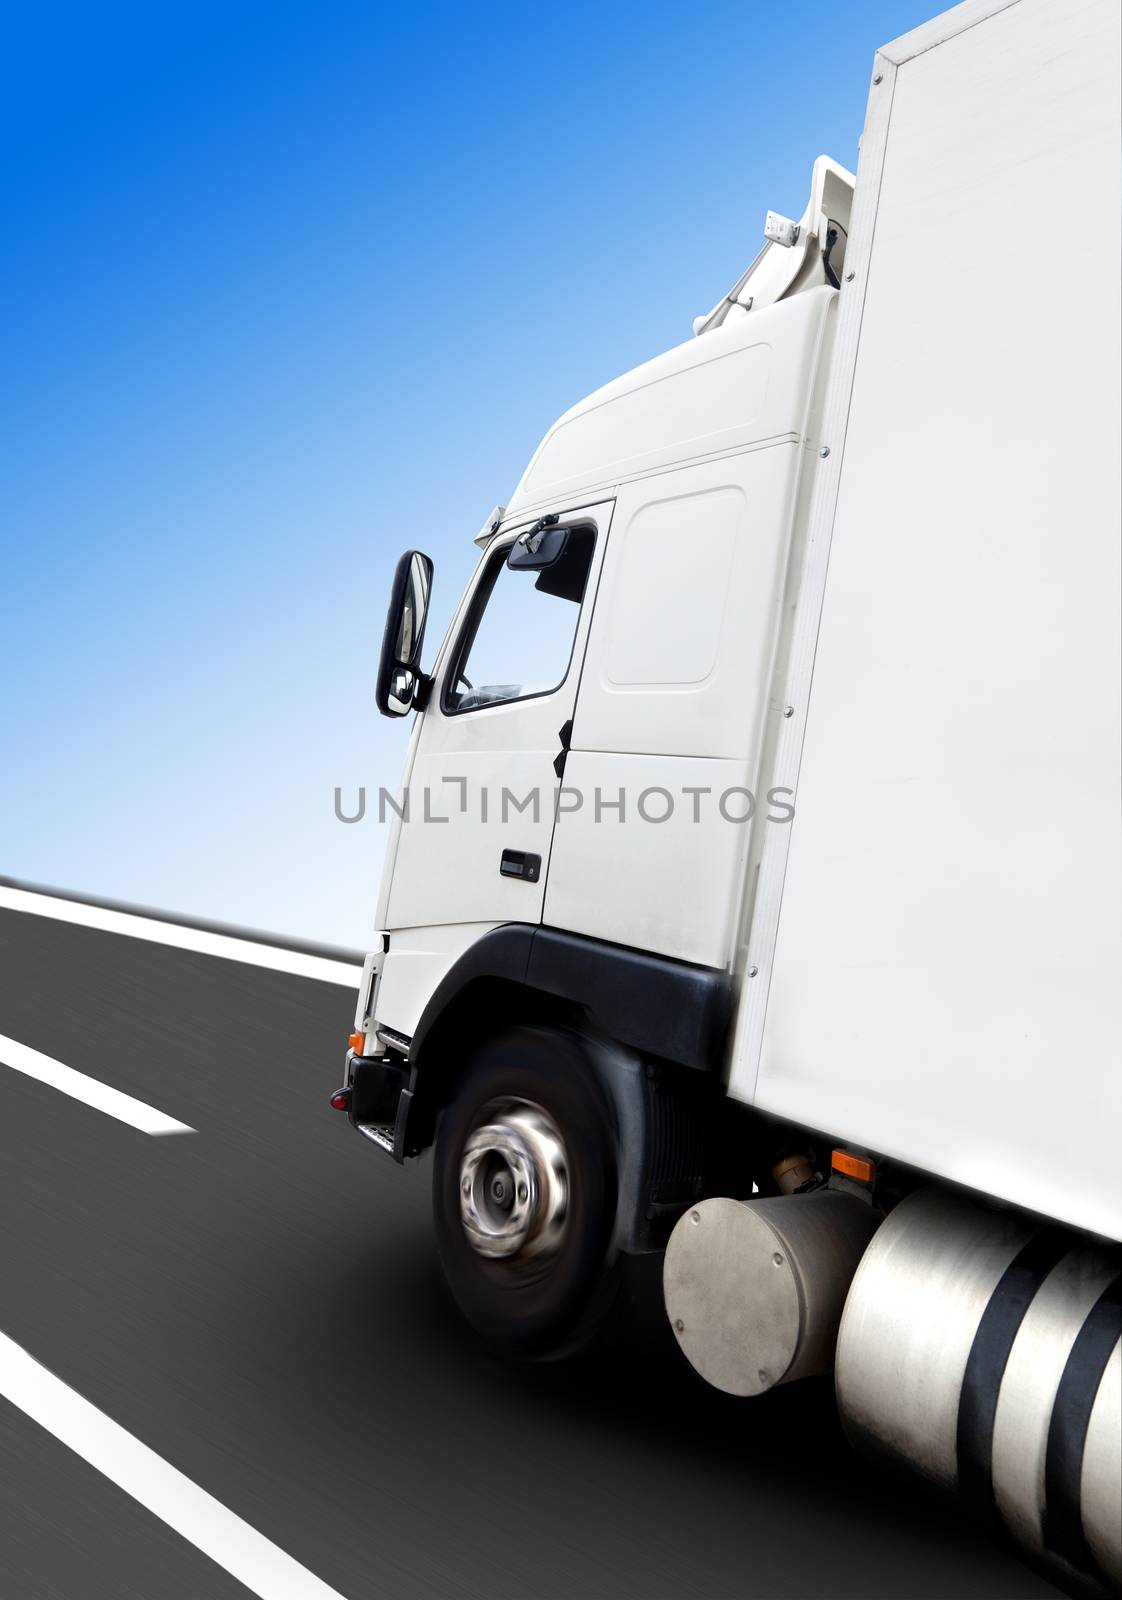 Truck and road by carloscastilla